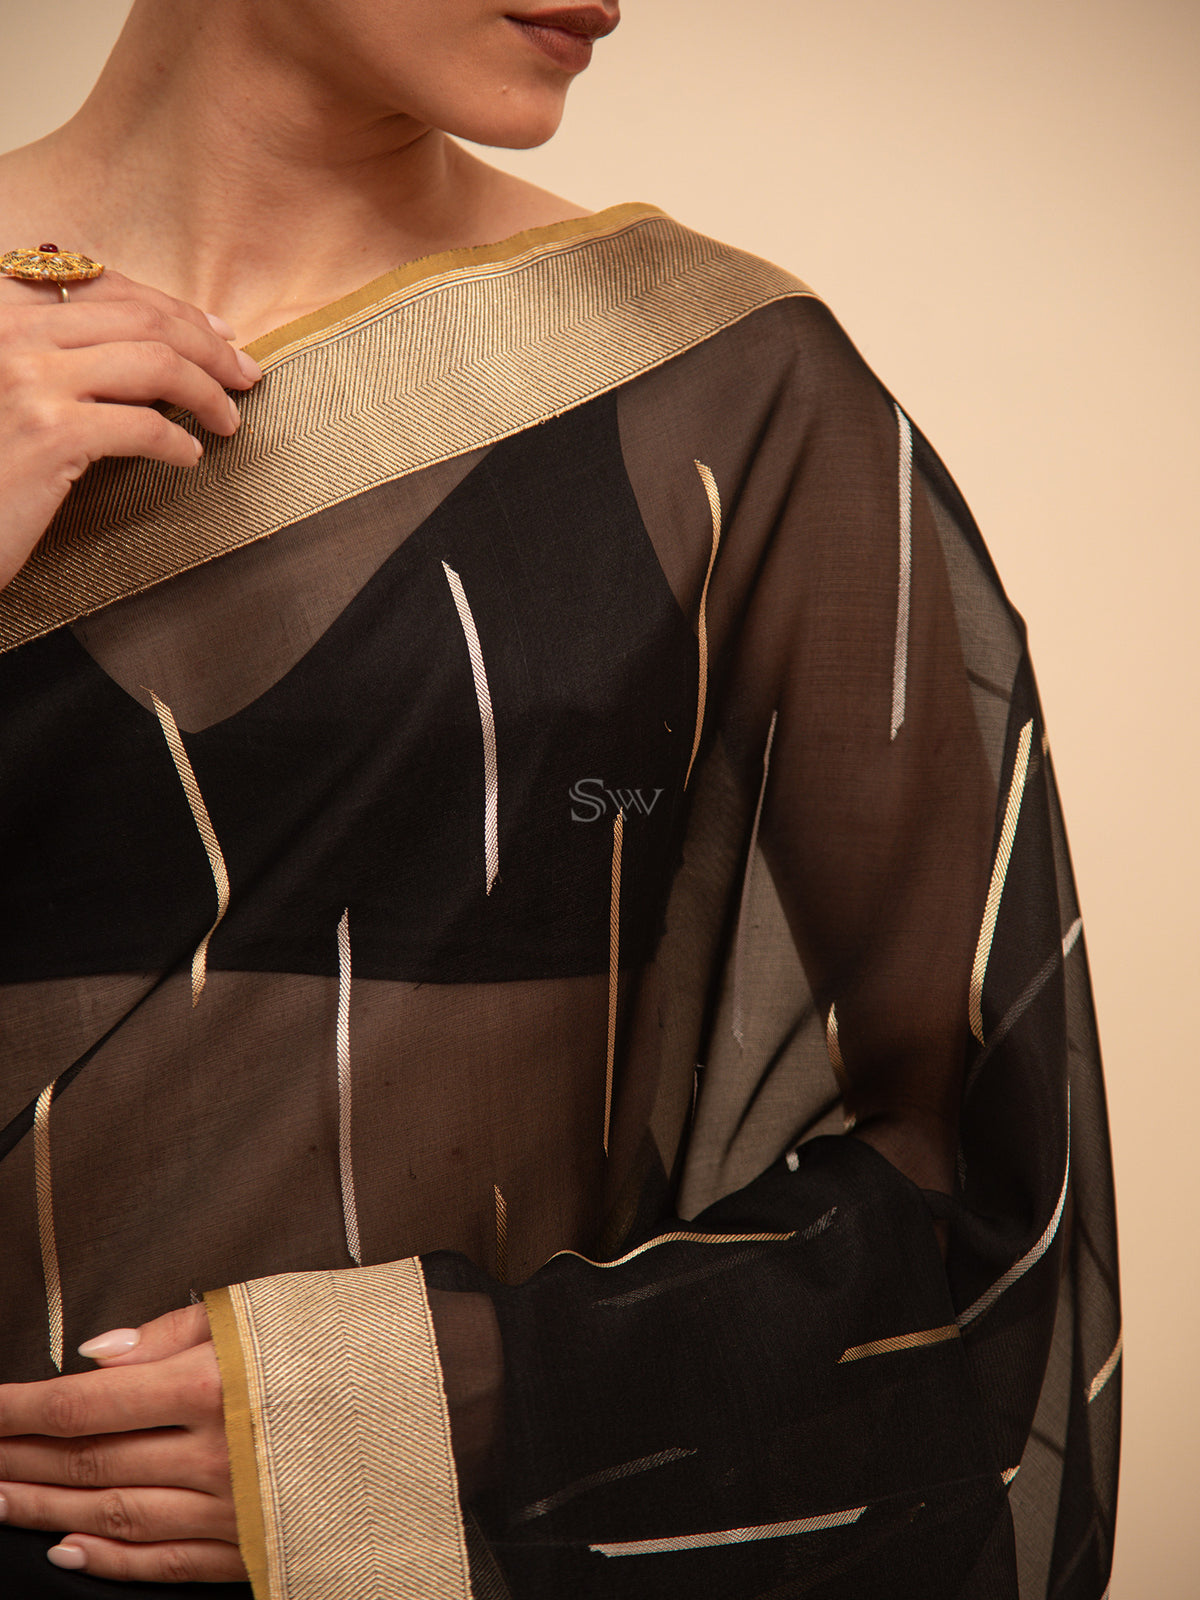 Black Stripe Organza Handloom Banarasi Saree - Sacred Weaves